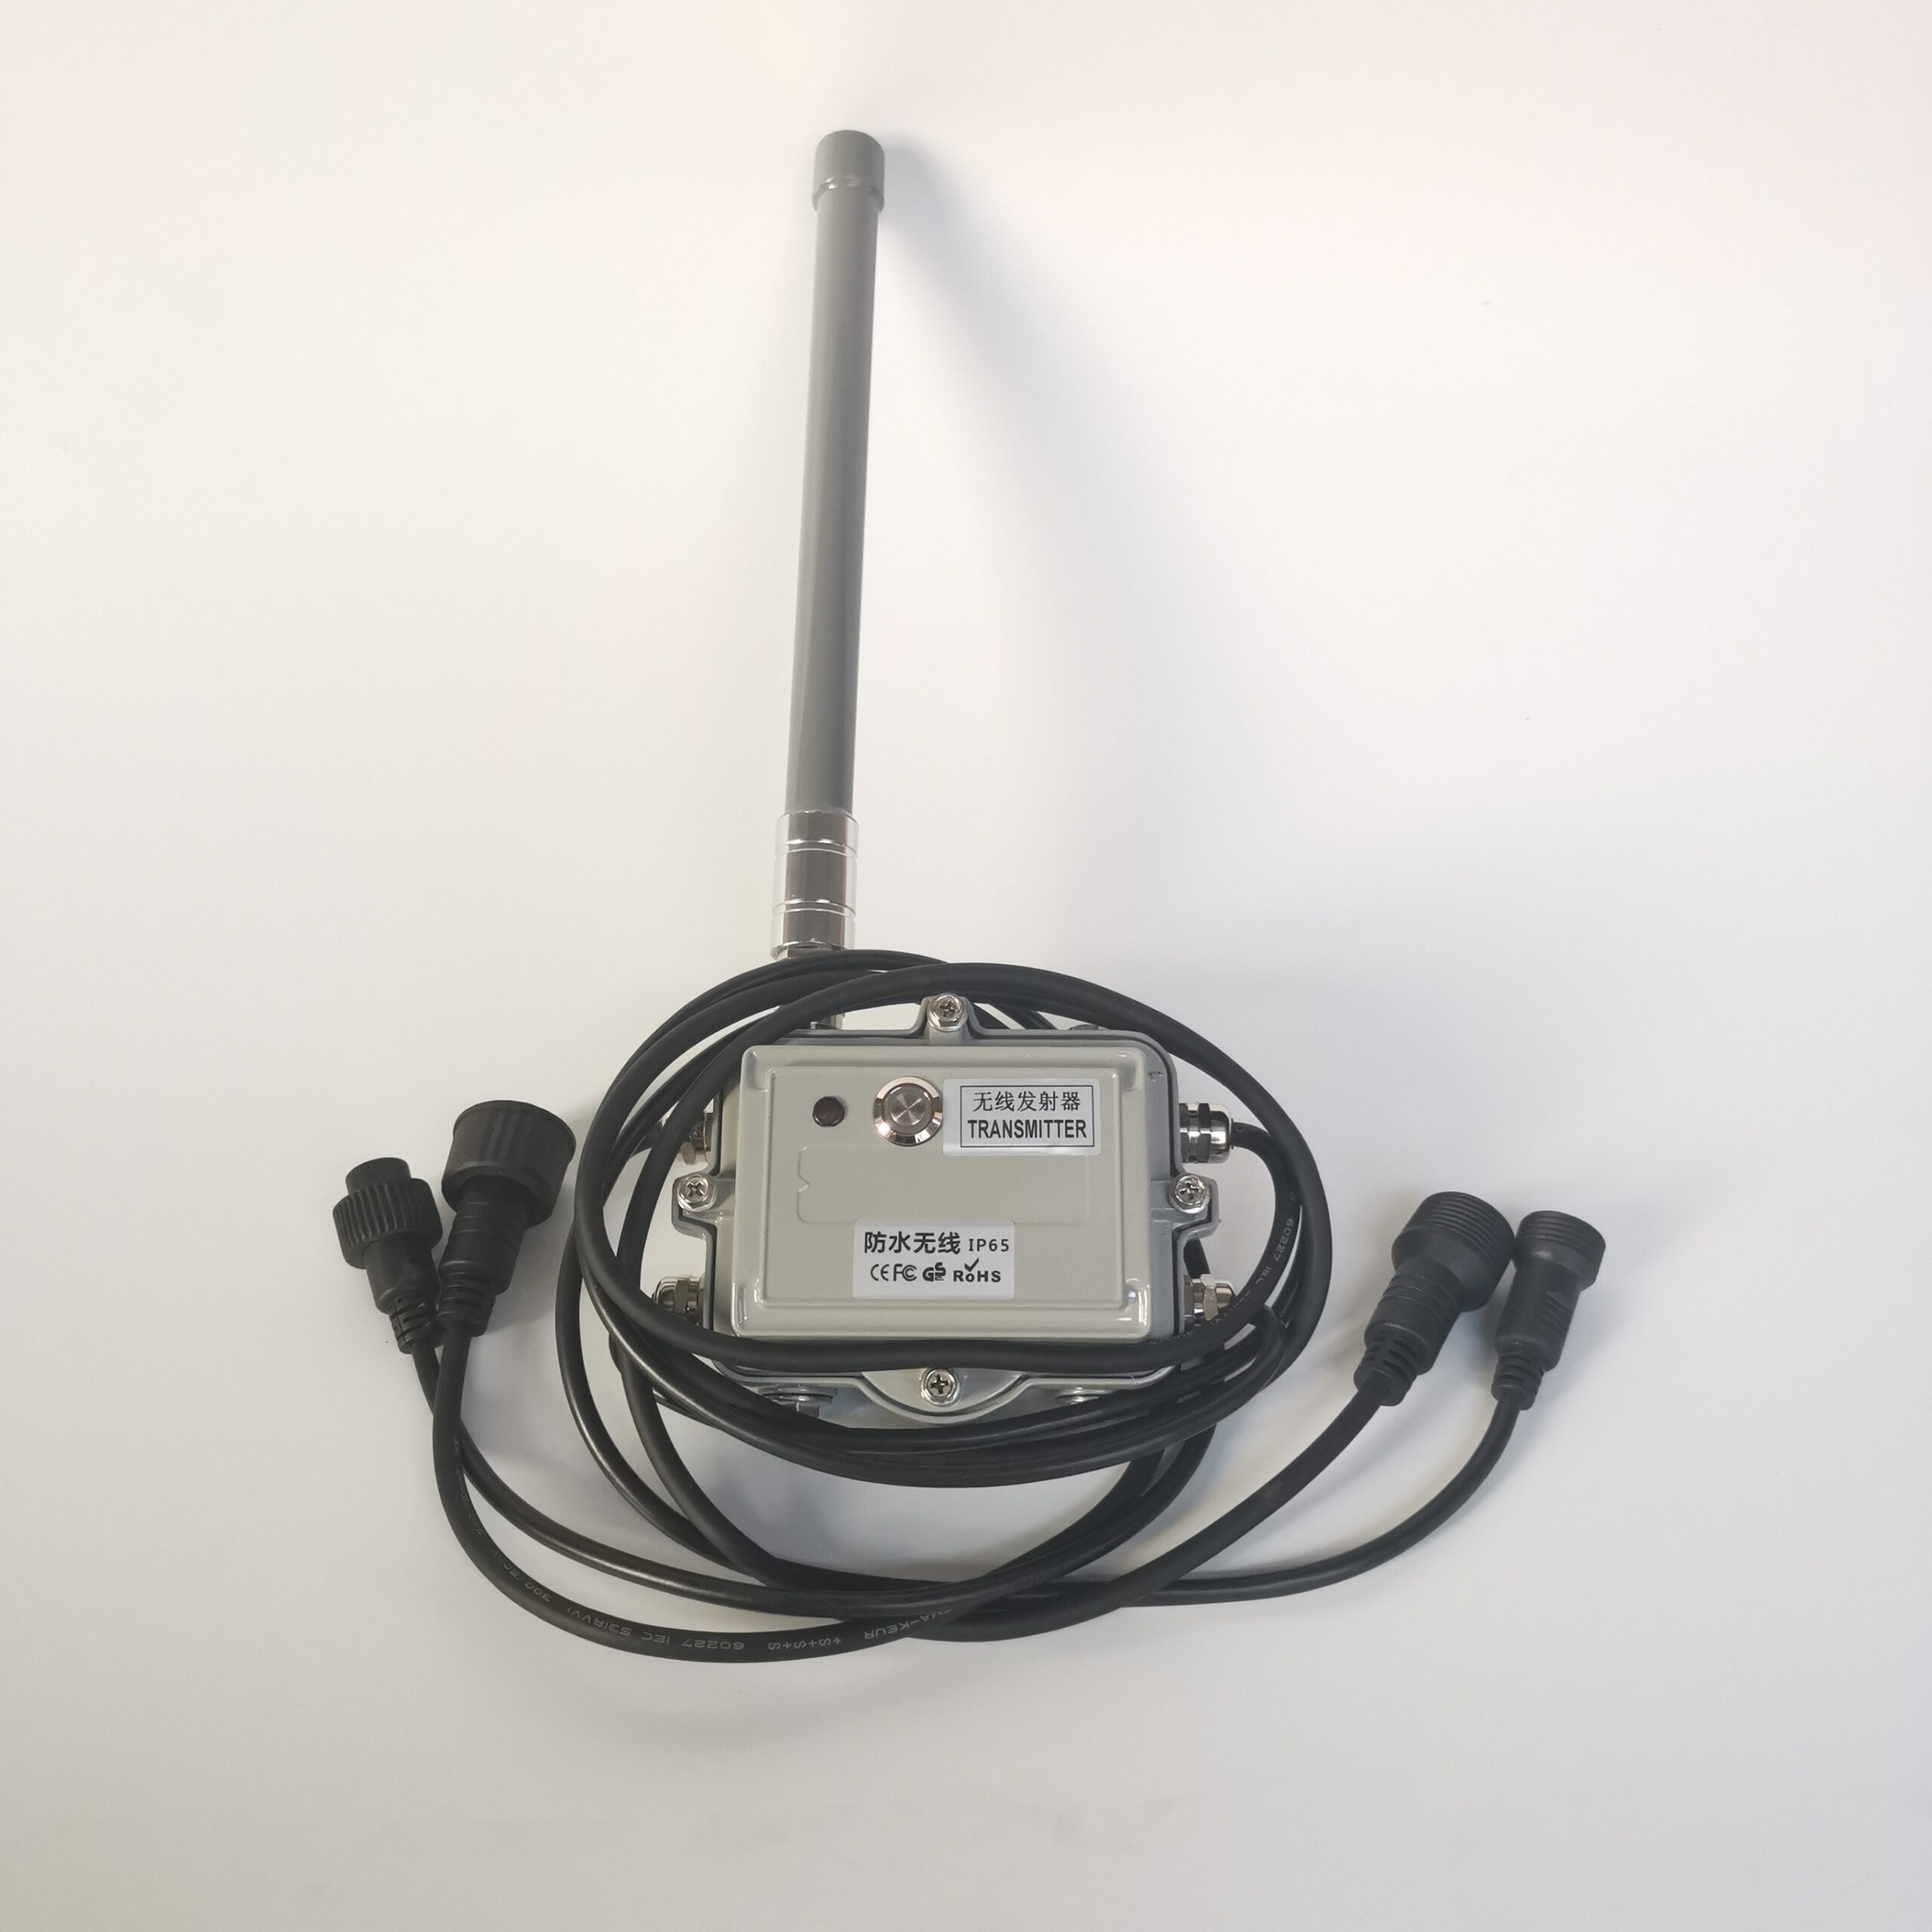 Sweden chip indoor waterproof DMX512 wireless transmitter No delay (2.4G/5.8G dual frequency ) - Dmx controller - 6